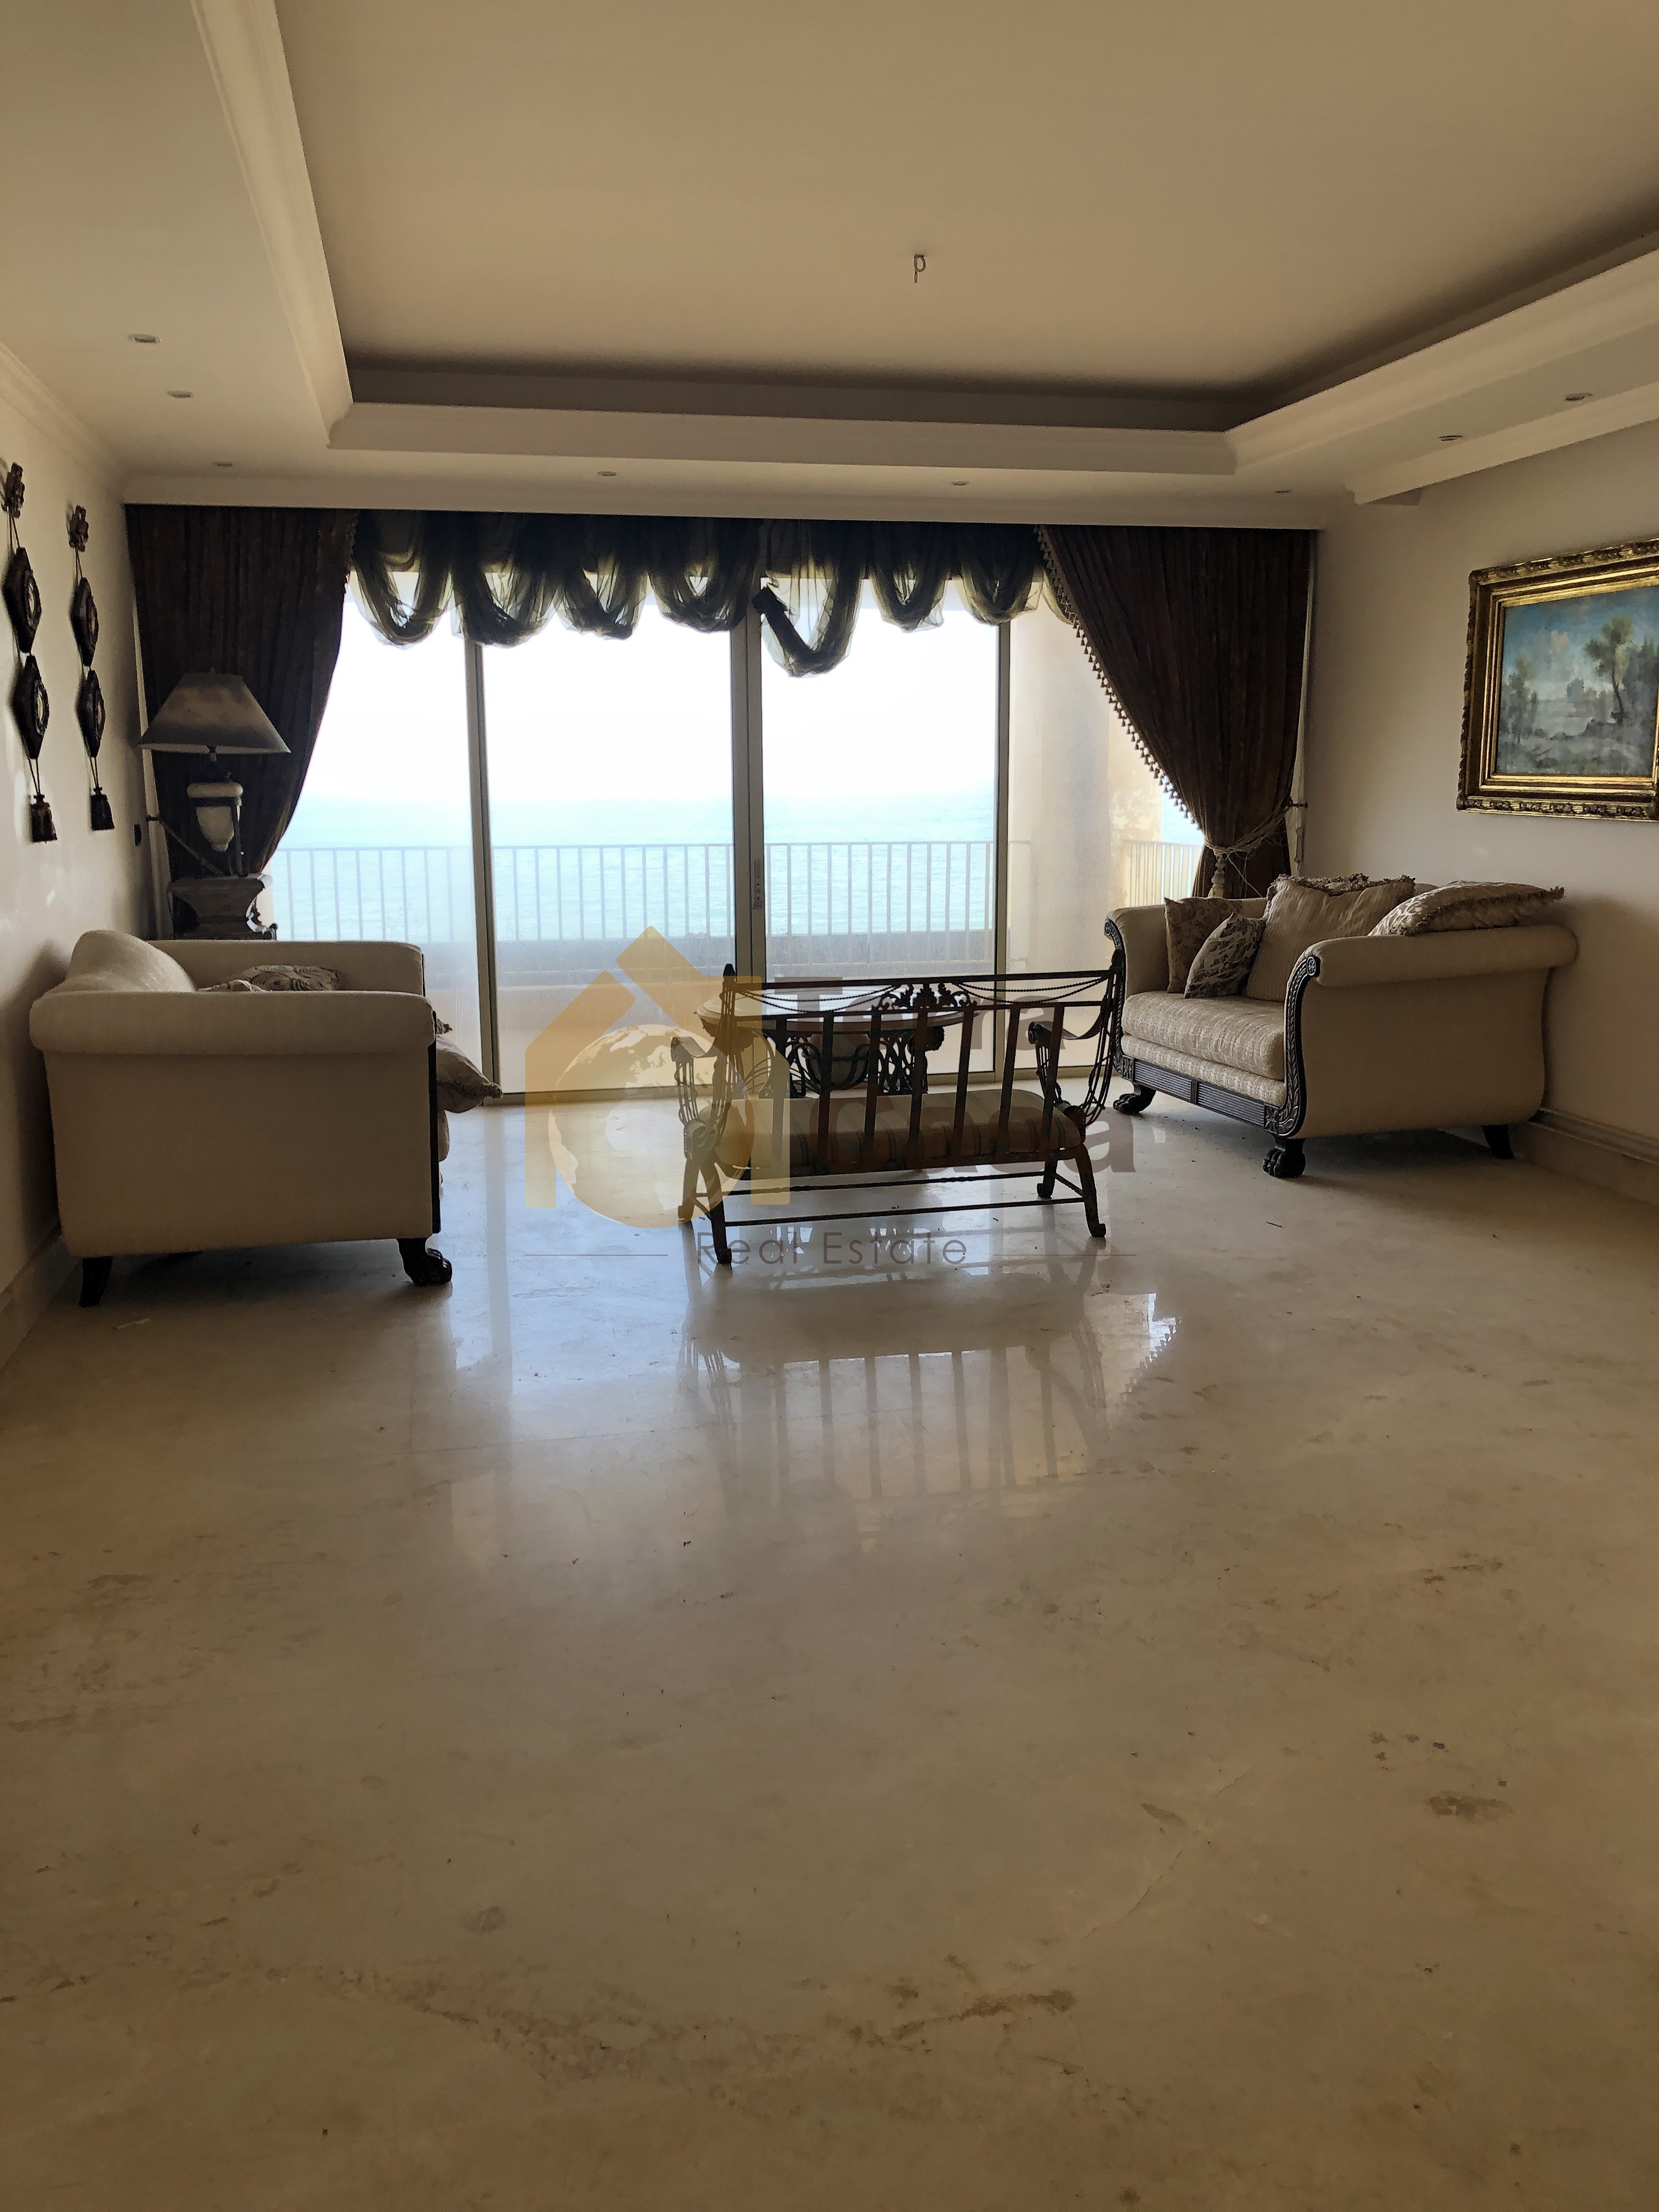 Ramlet el bayda furnished apartment